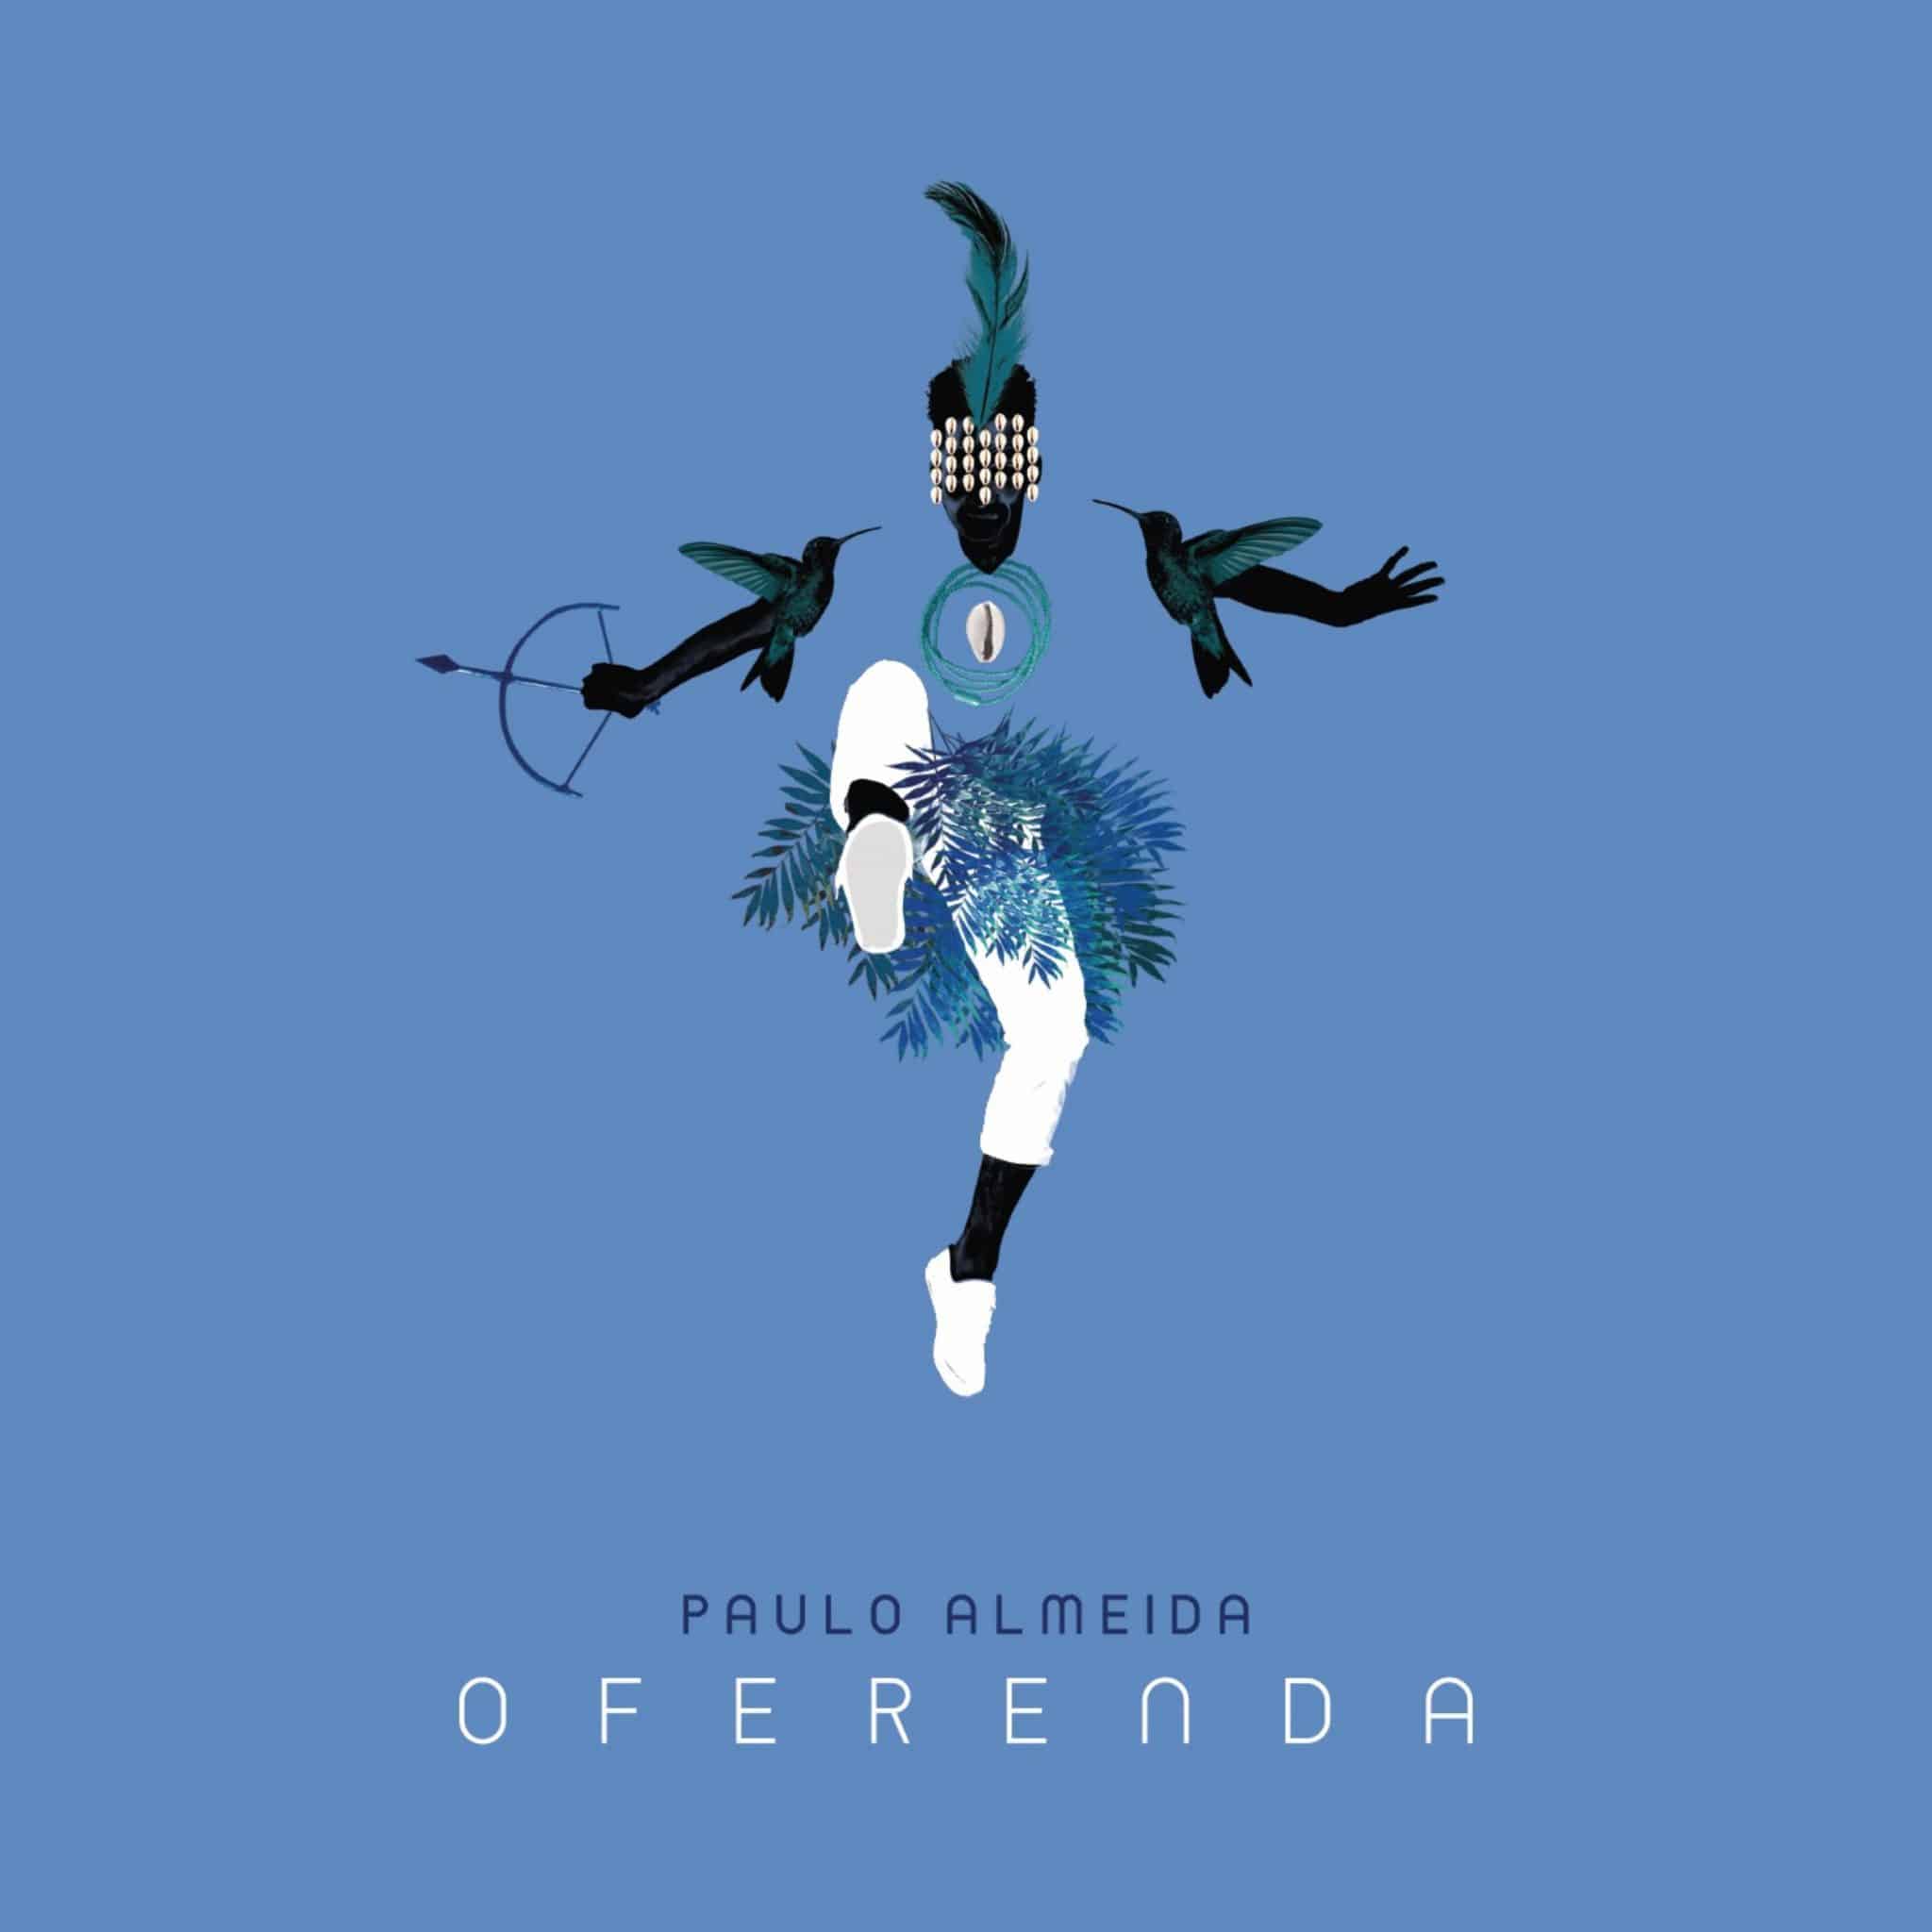 revistaprosaversoearte.com - 'Oferenda', álbum de Paulo Almeida, baterista paulista, radicado na Suiça